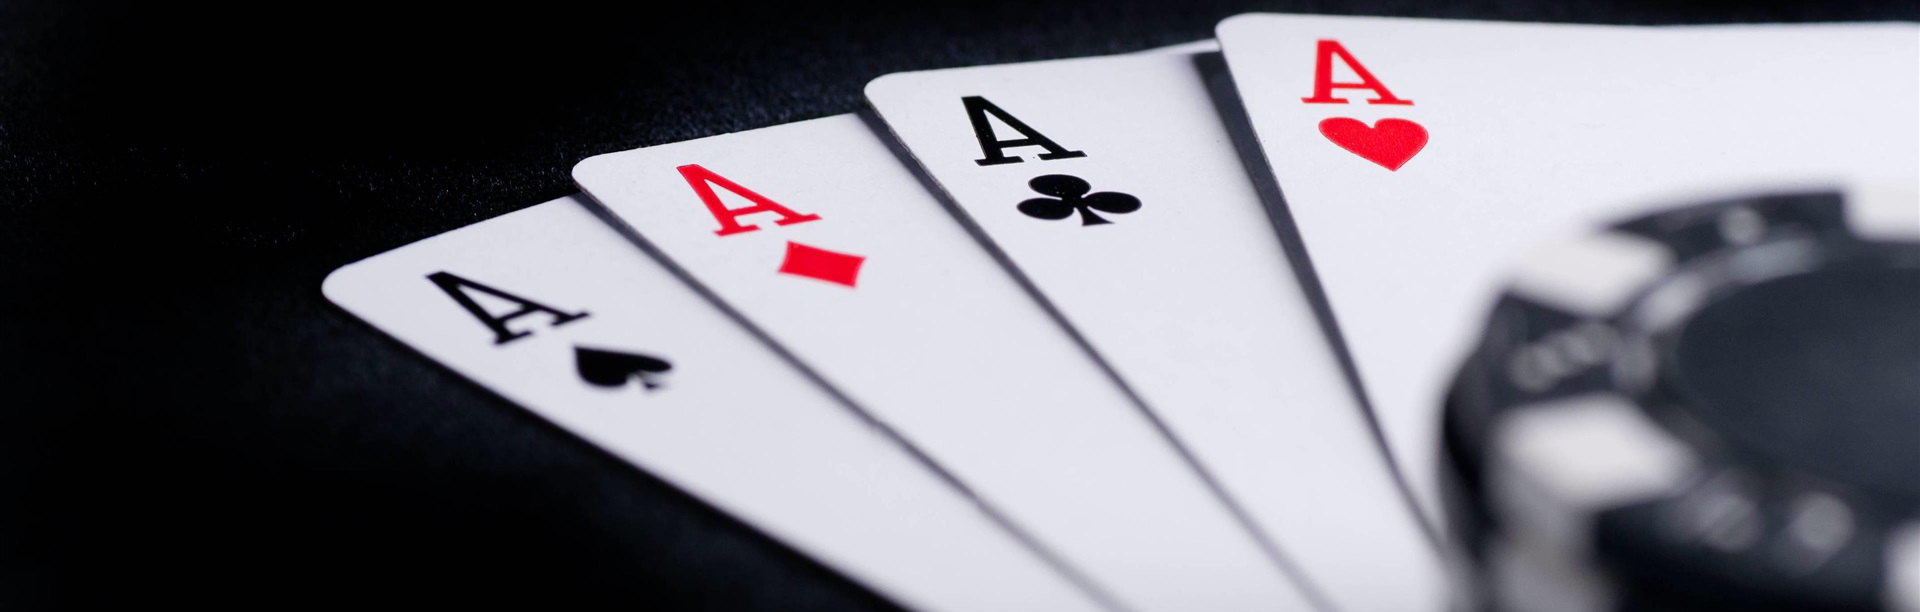 6 deck blackjack strategy buster bet